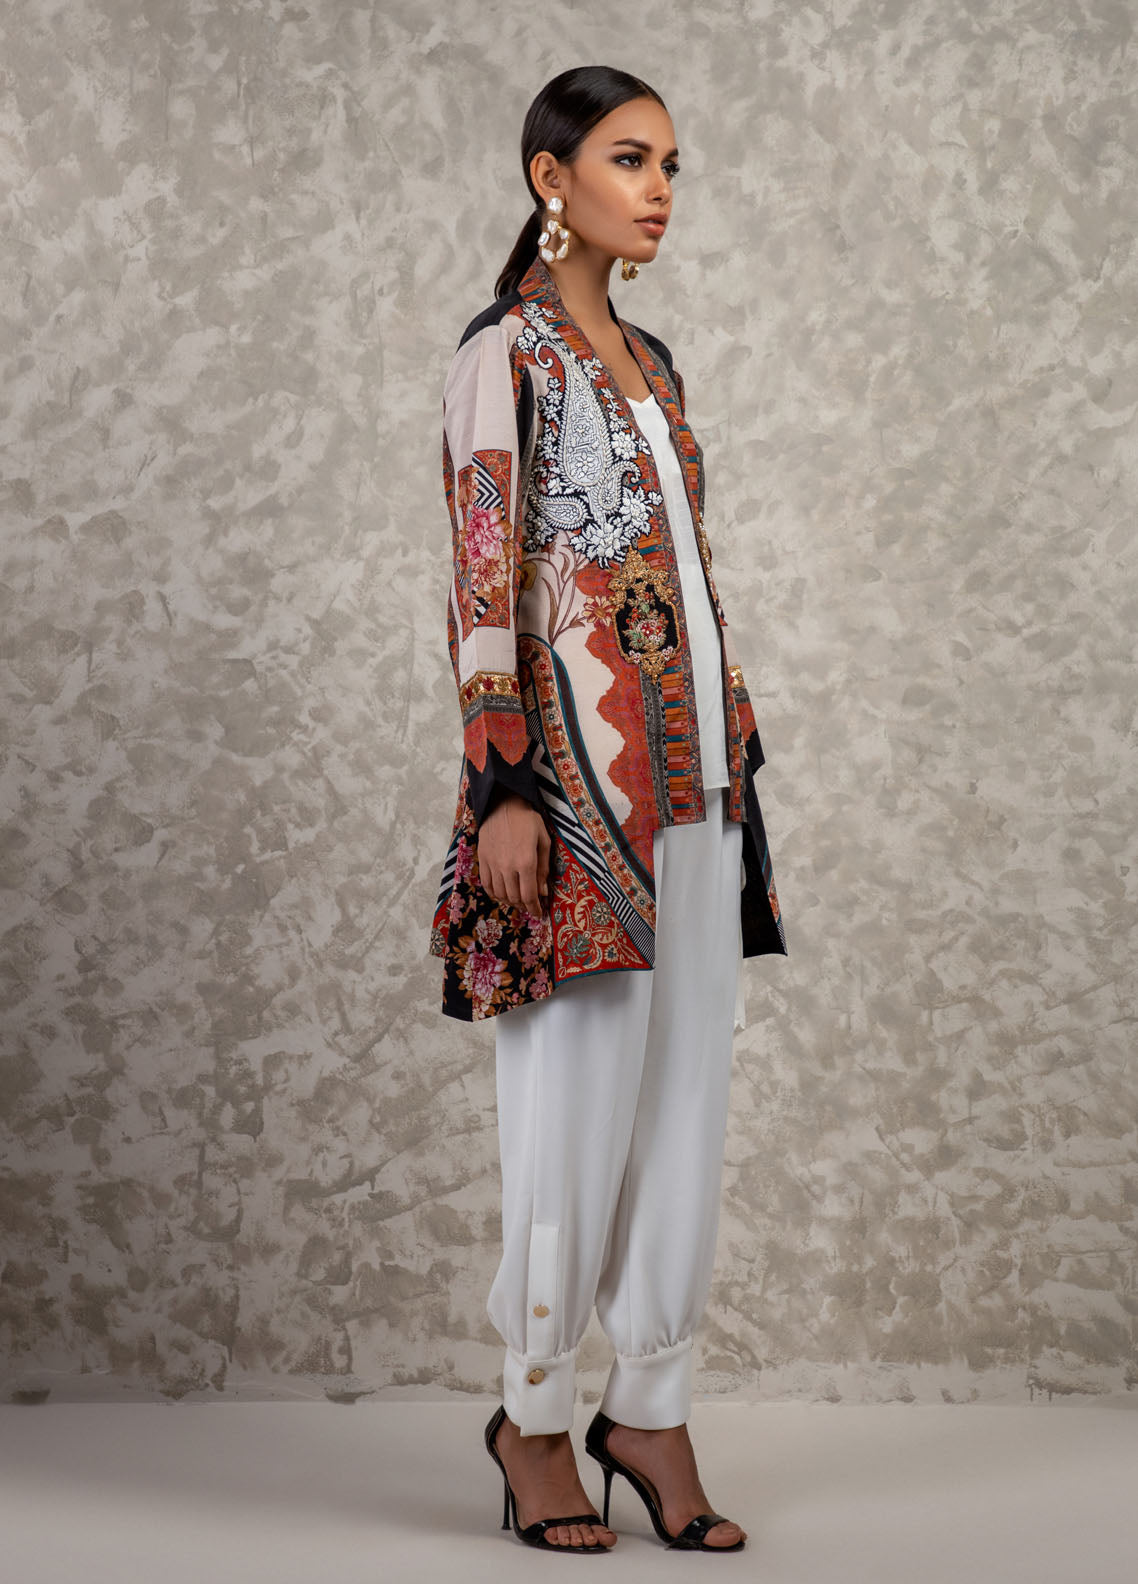 Shamaeel Ansari Luxury Pret Embroidered Silk Shirt AM-19